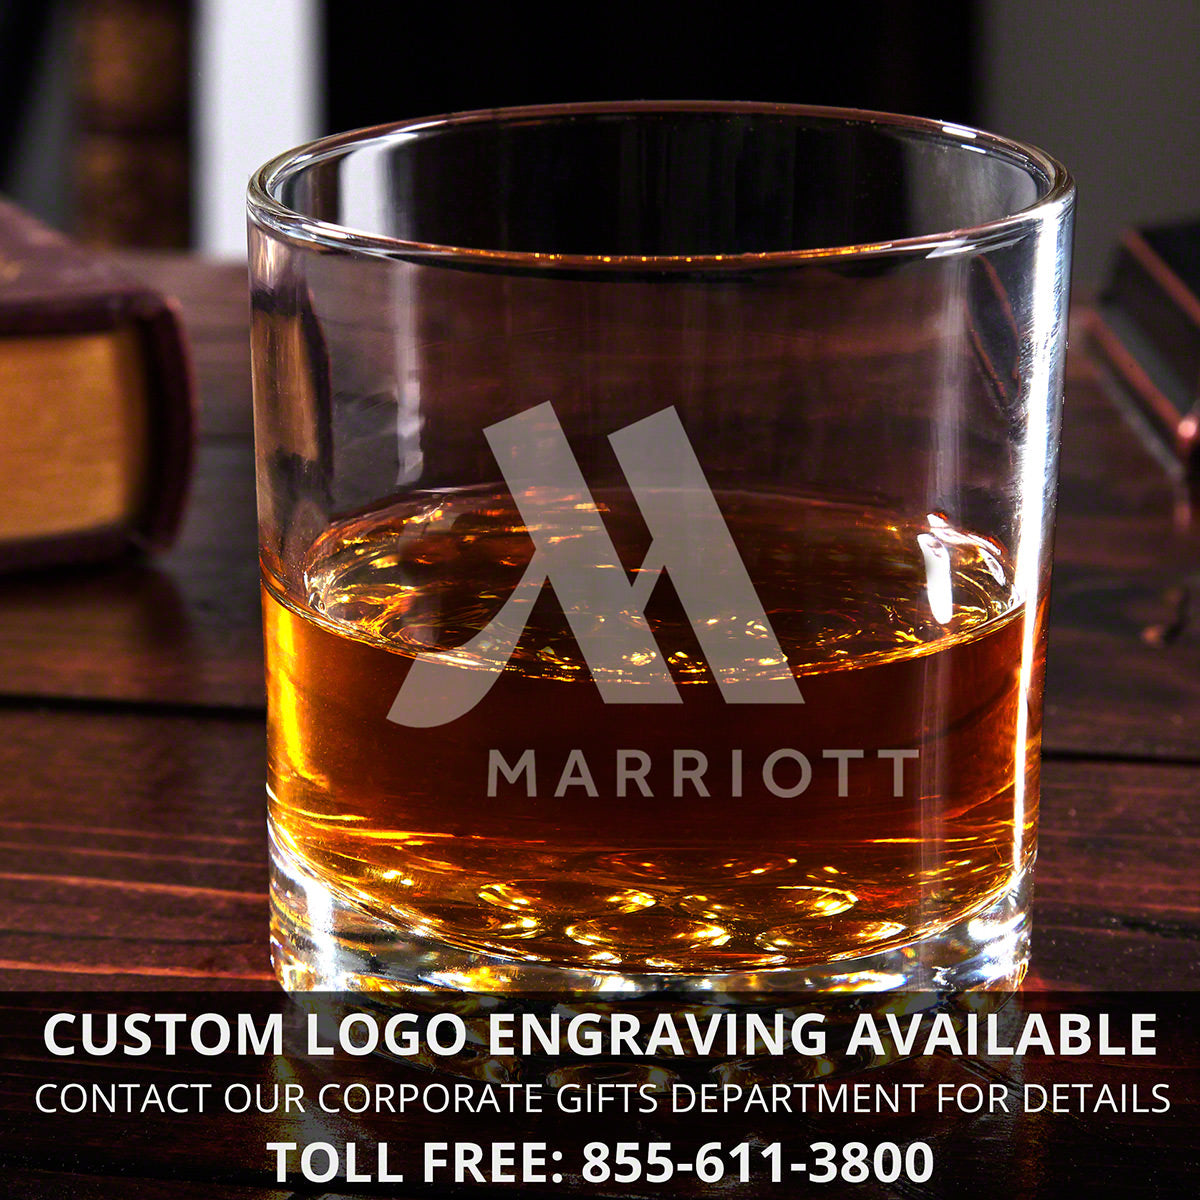 El Matador Bull Whiskey Decanter Set With Custom Buckman Glasses